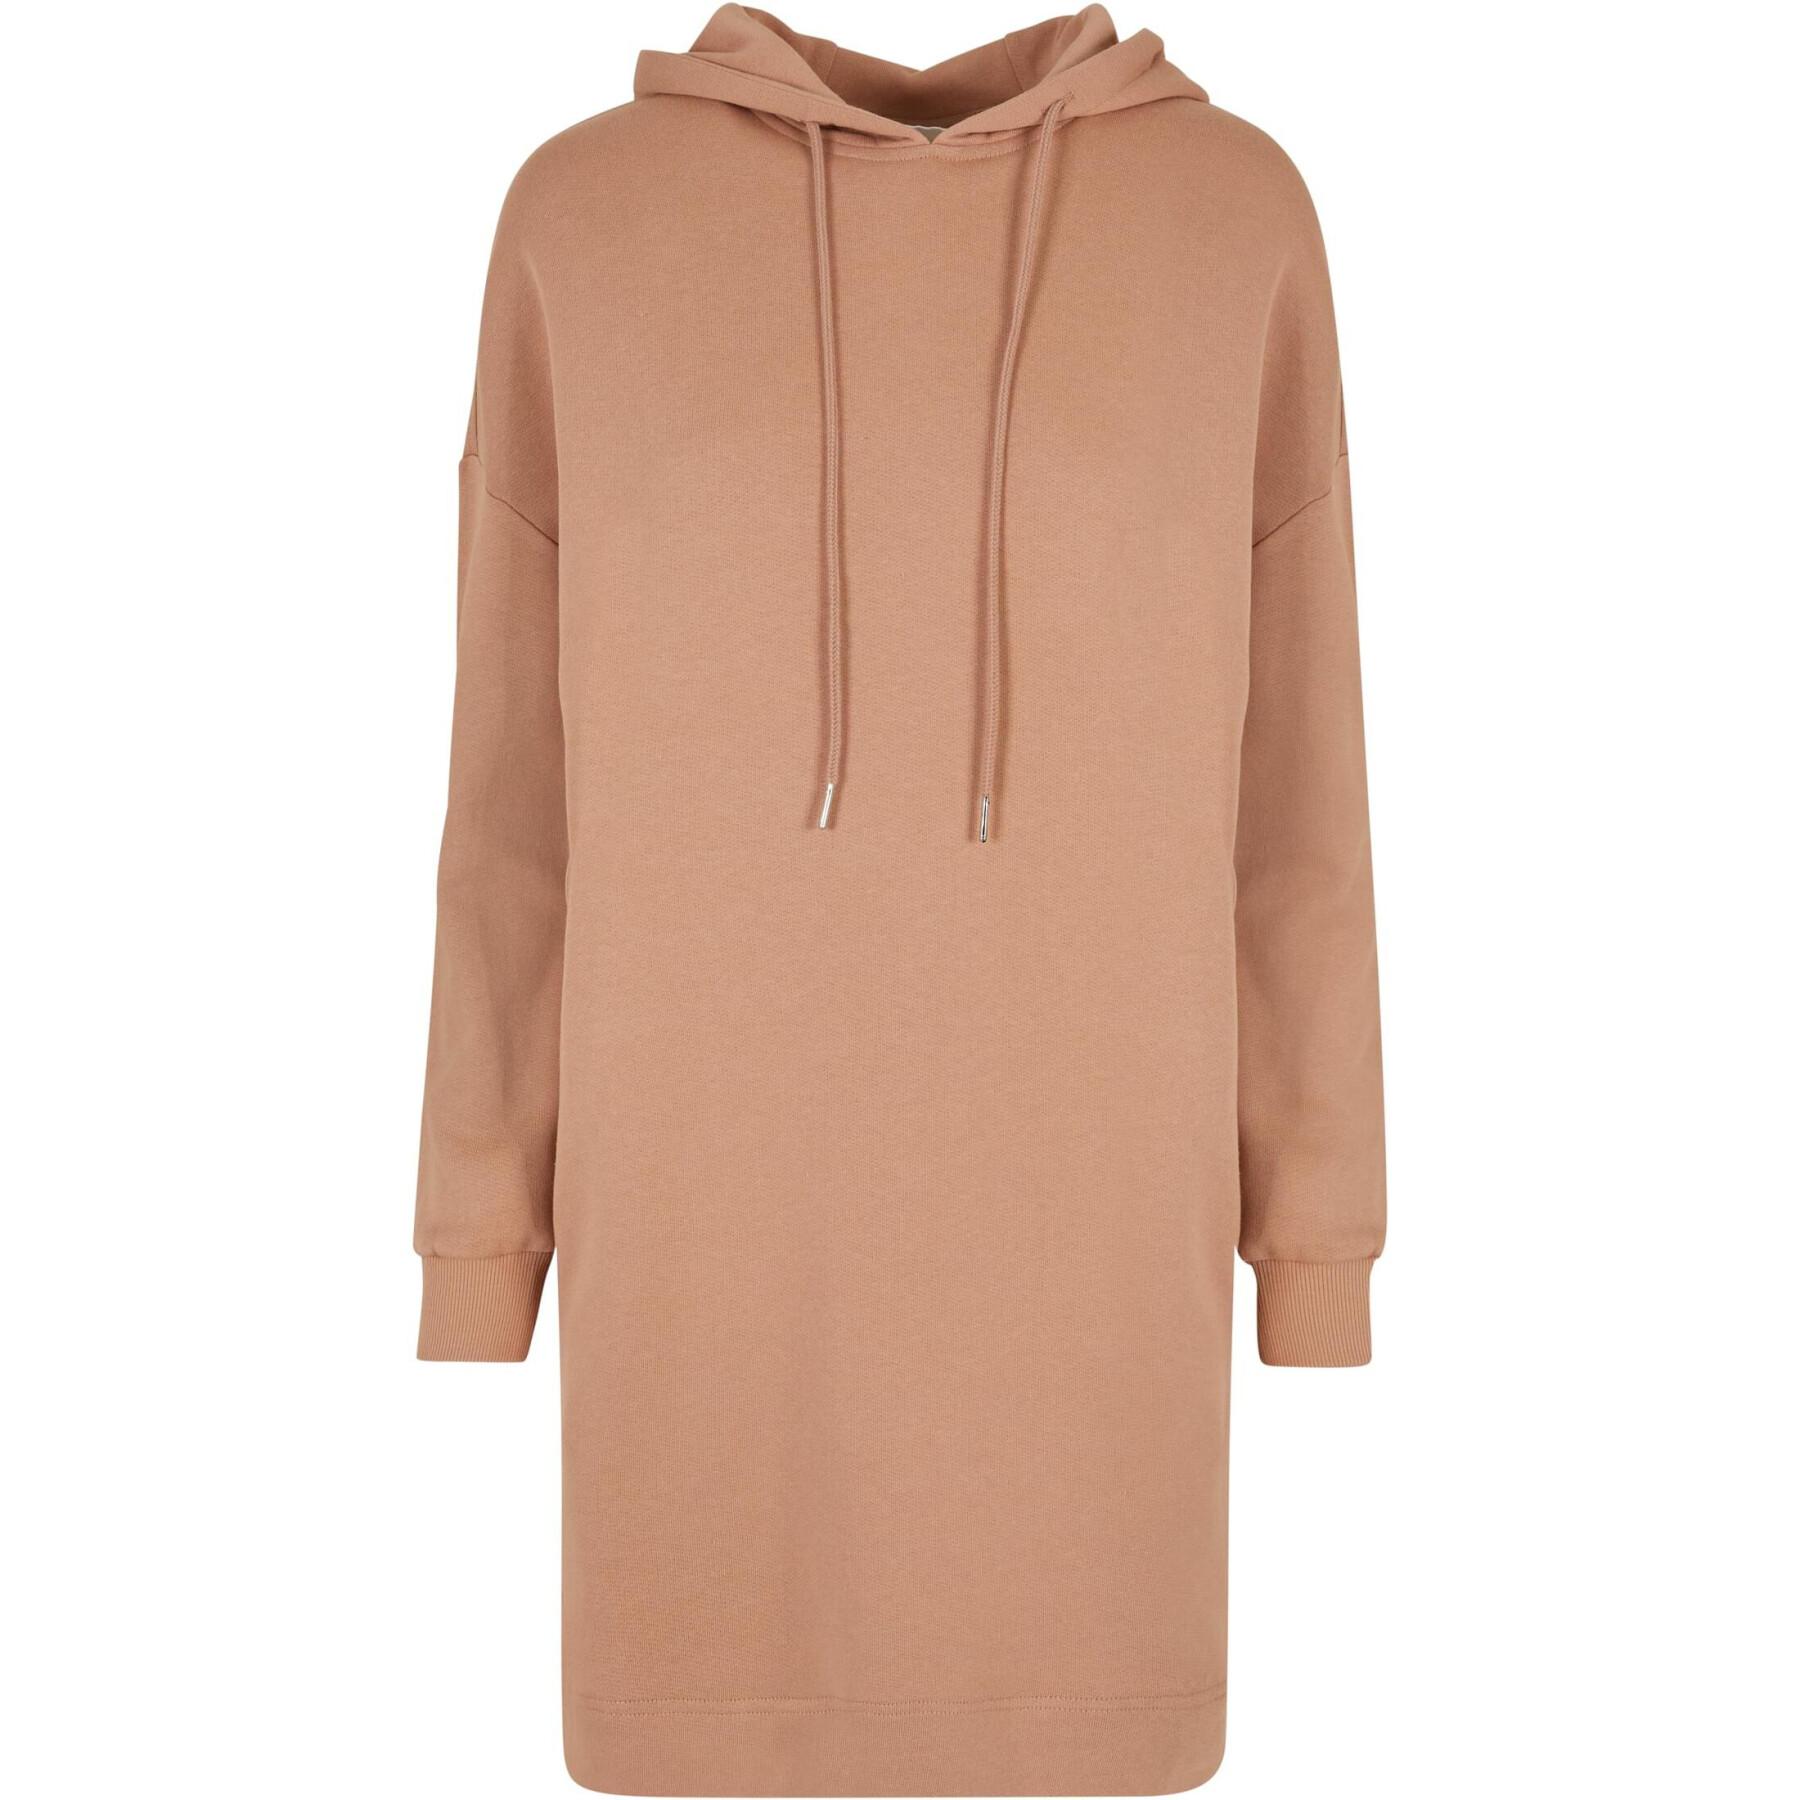 Dress hooded Women's large sizes Urban Classics Organic Terry